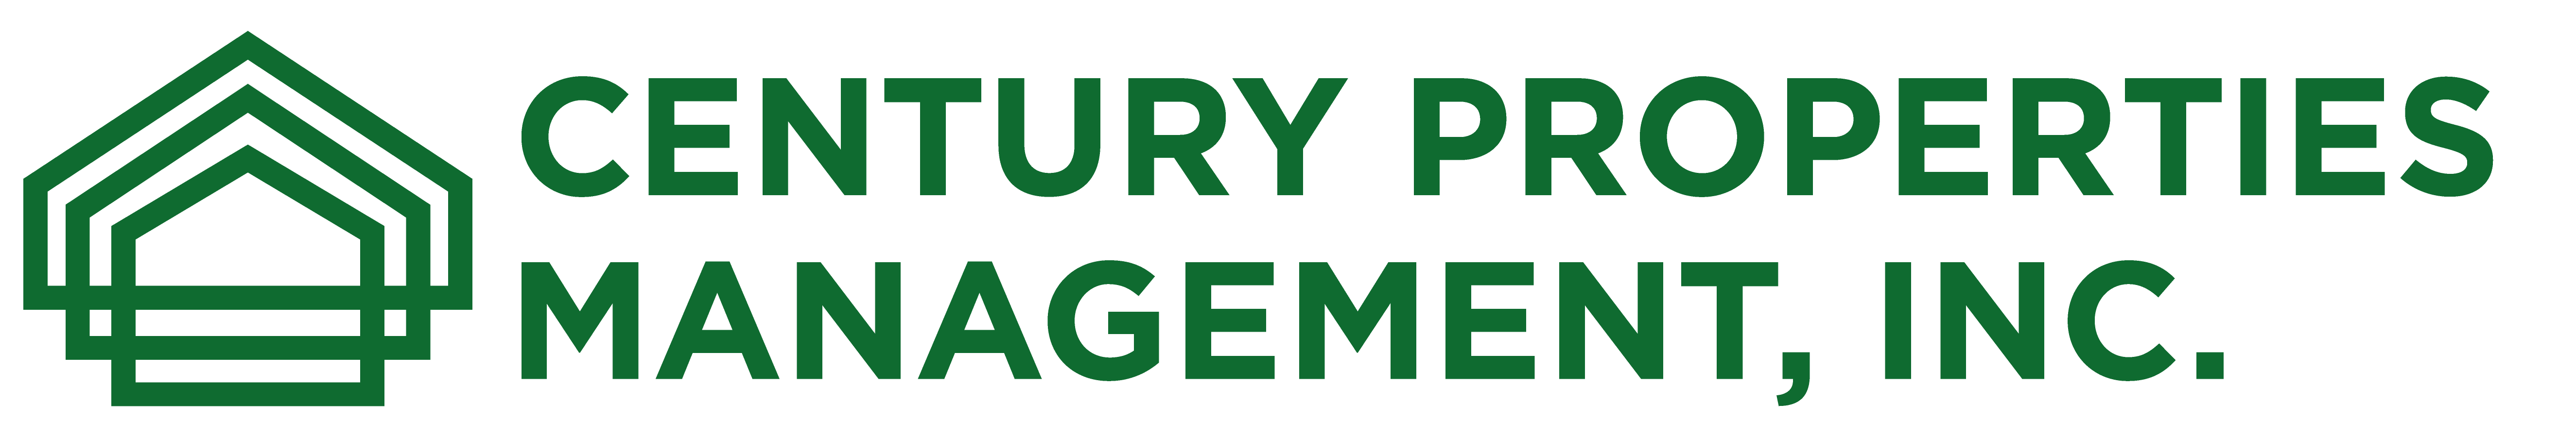 Century Properties Management, Inc.